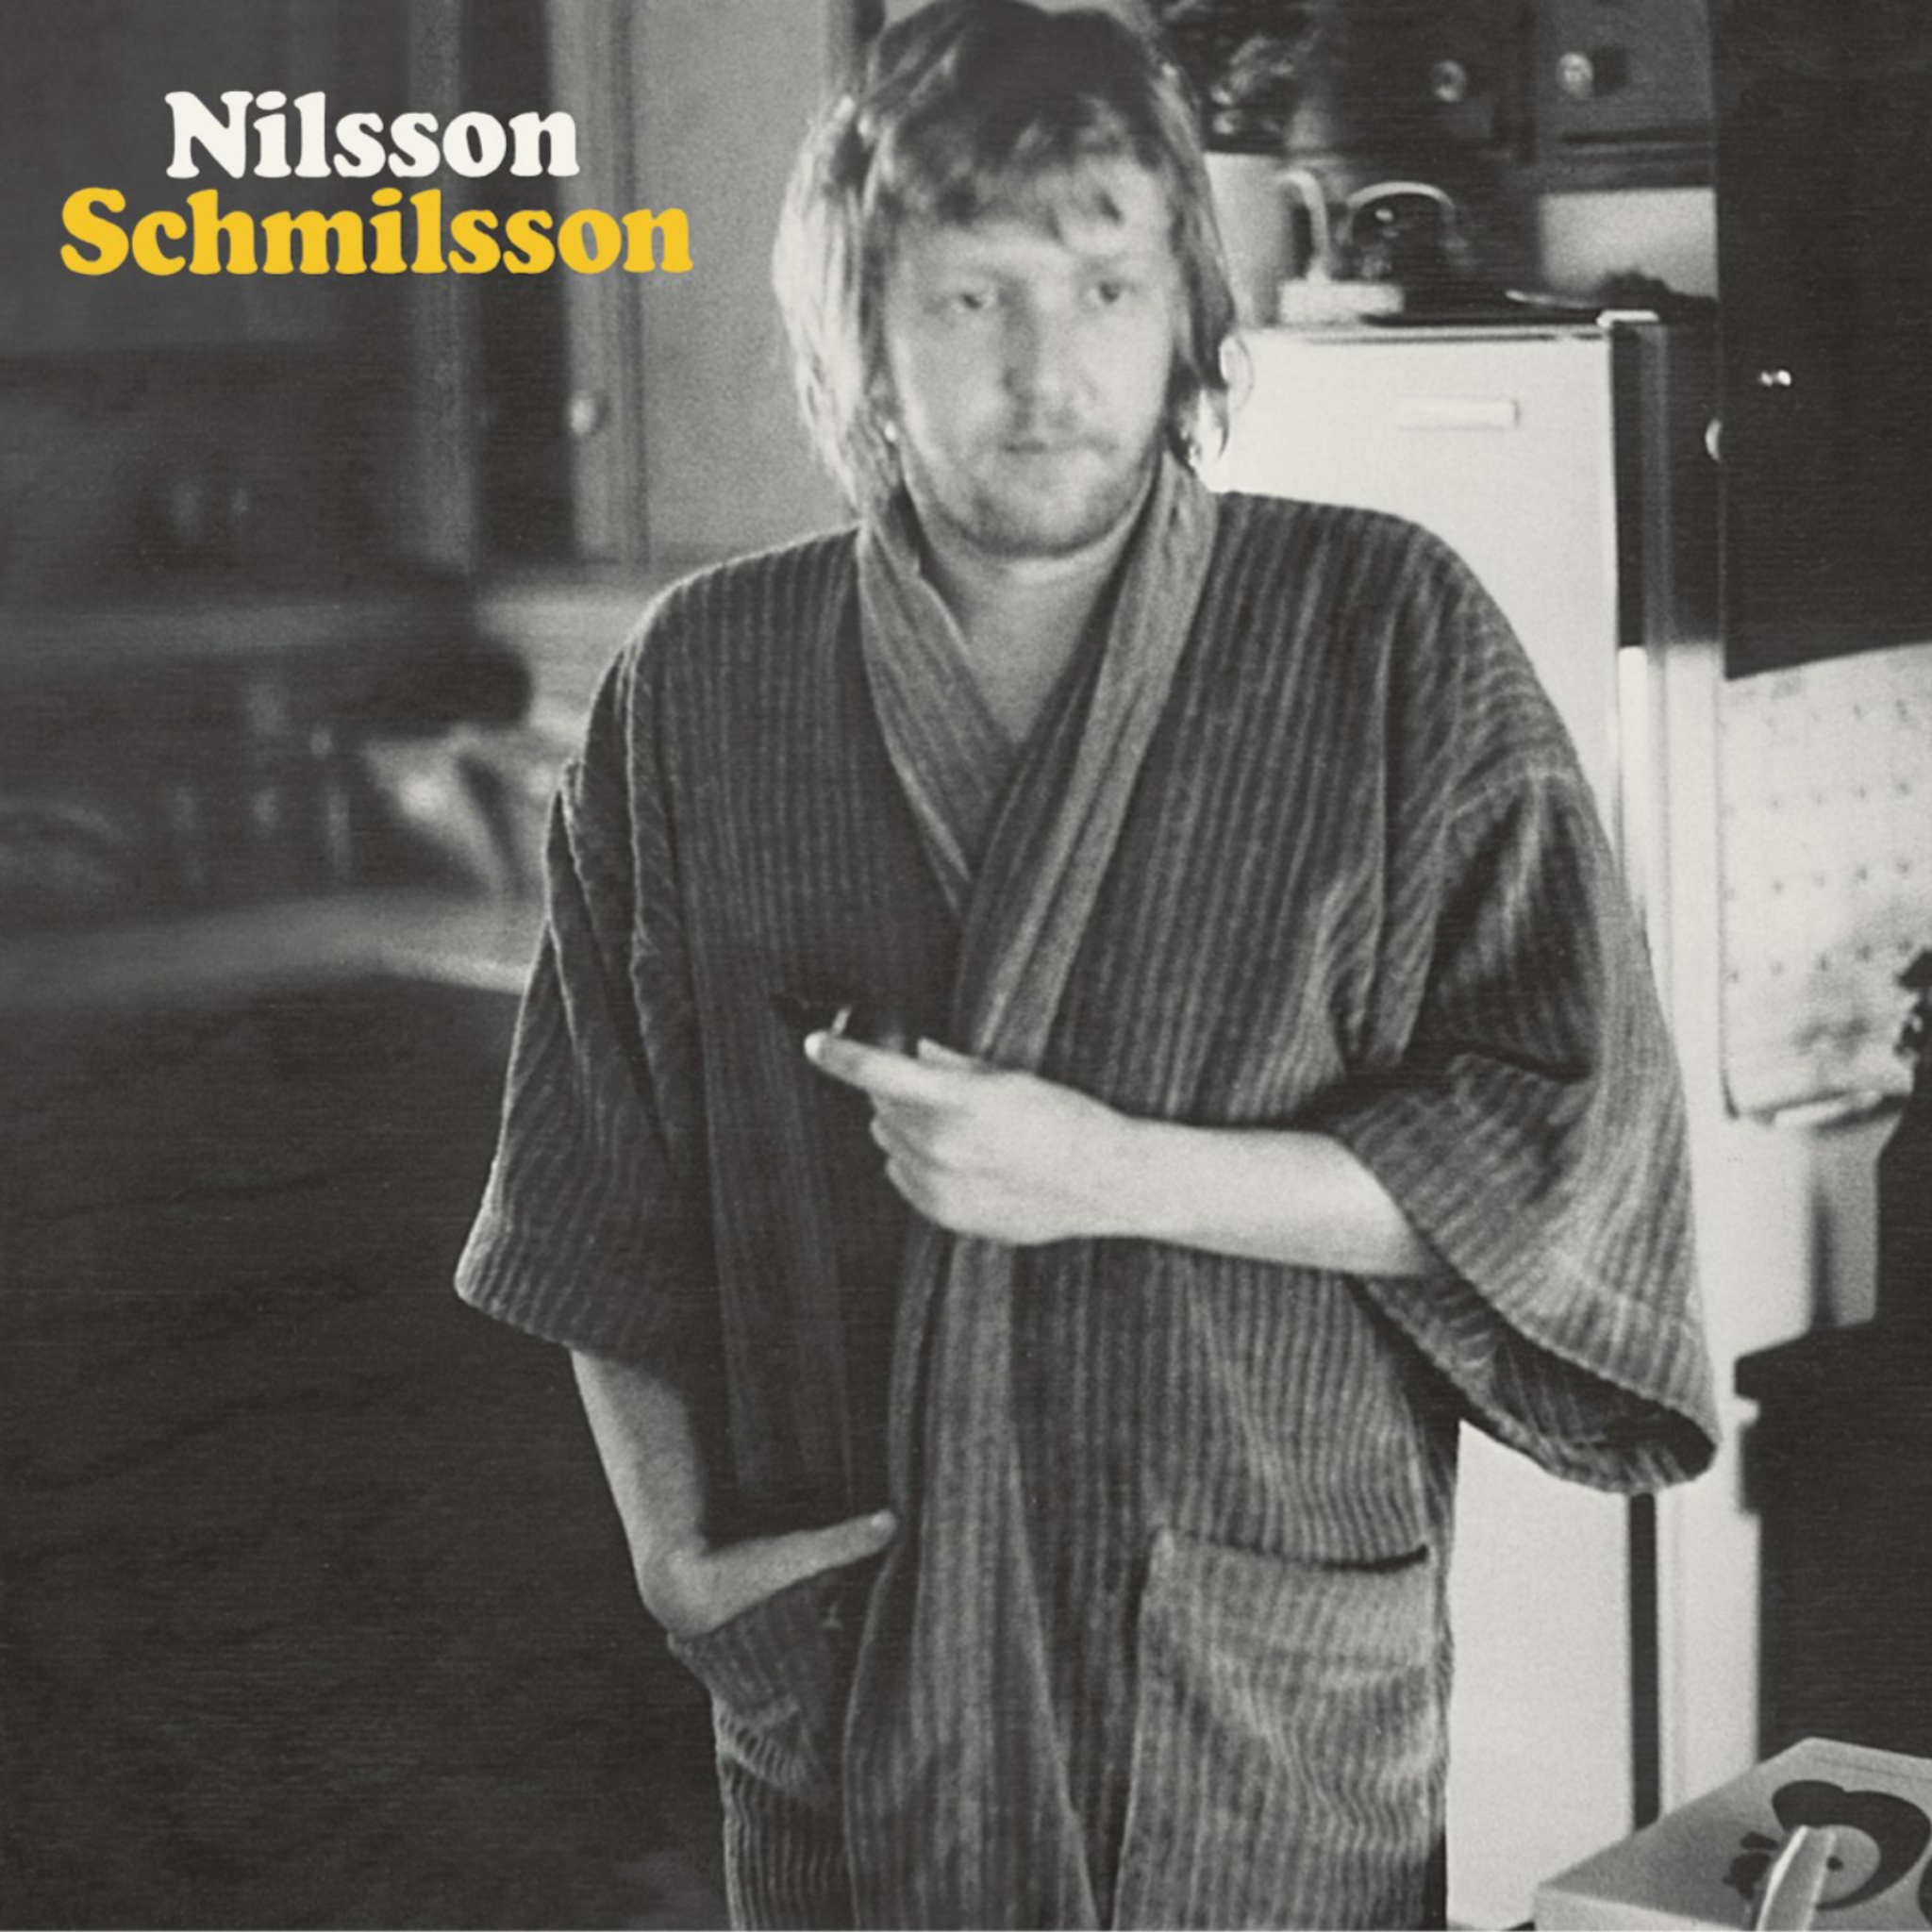 nilsson schmilsson album cover